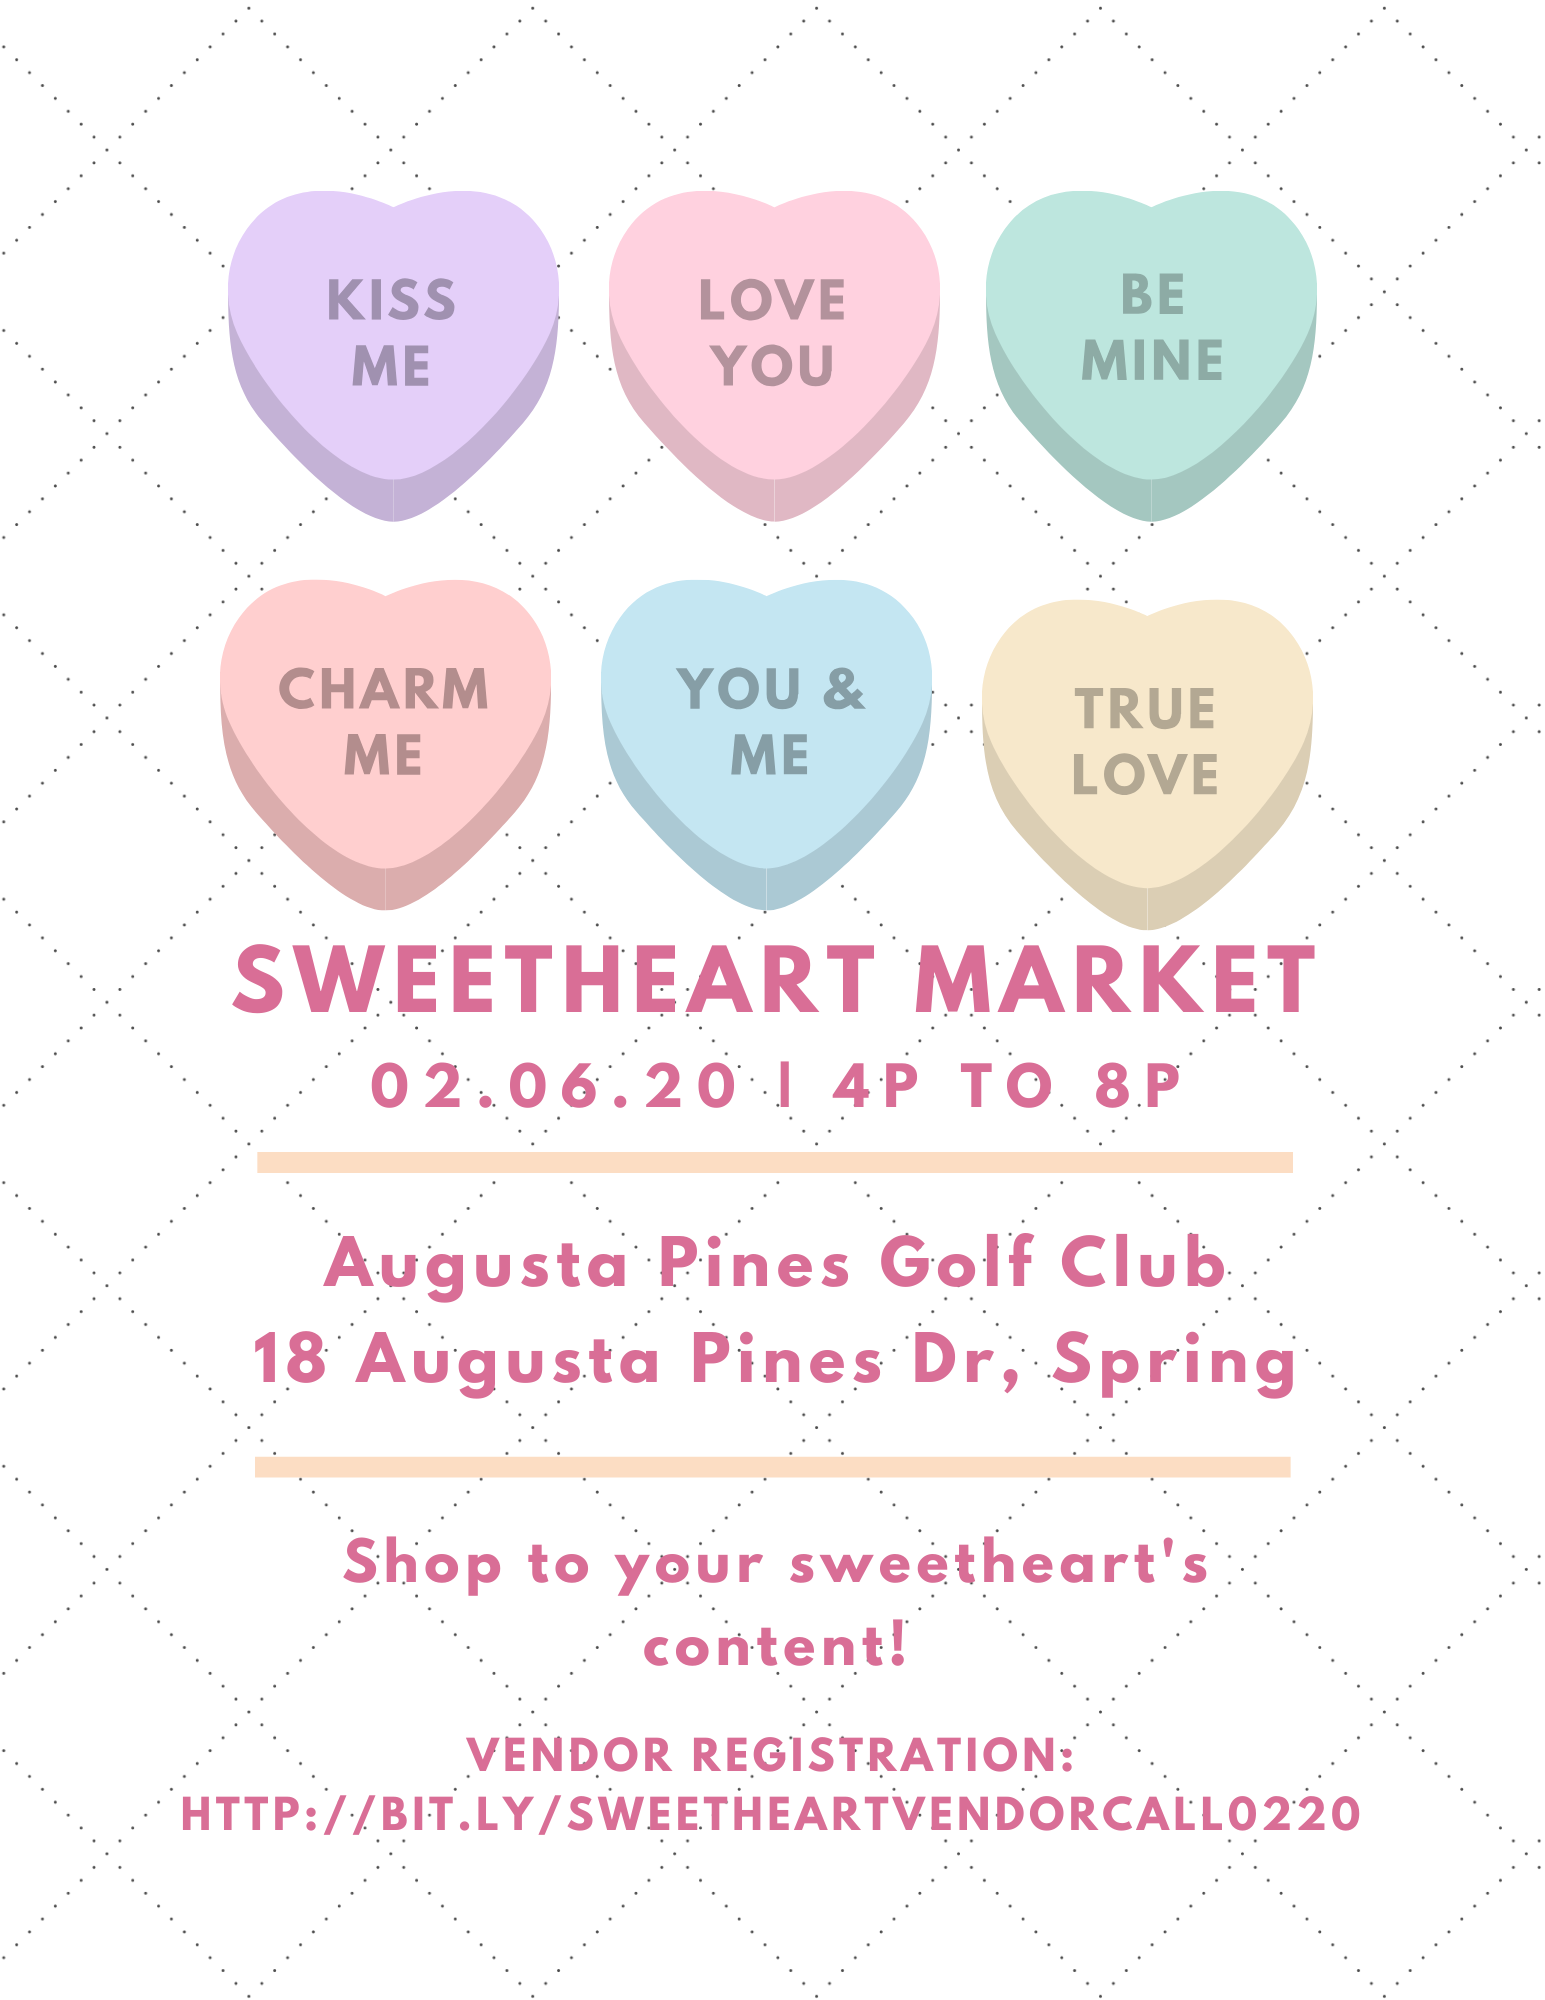 Vendor Call - Sweetheart Market